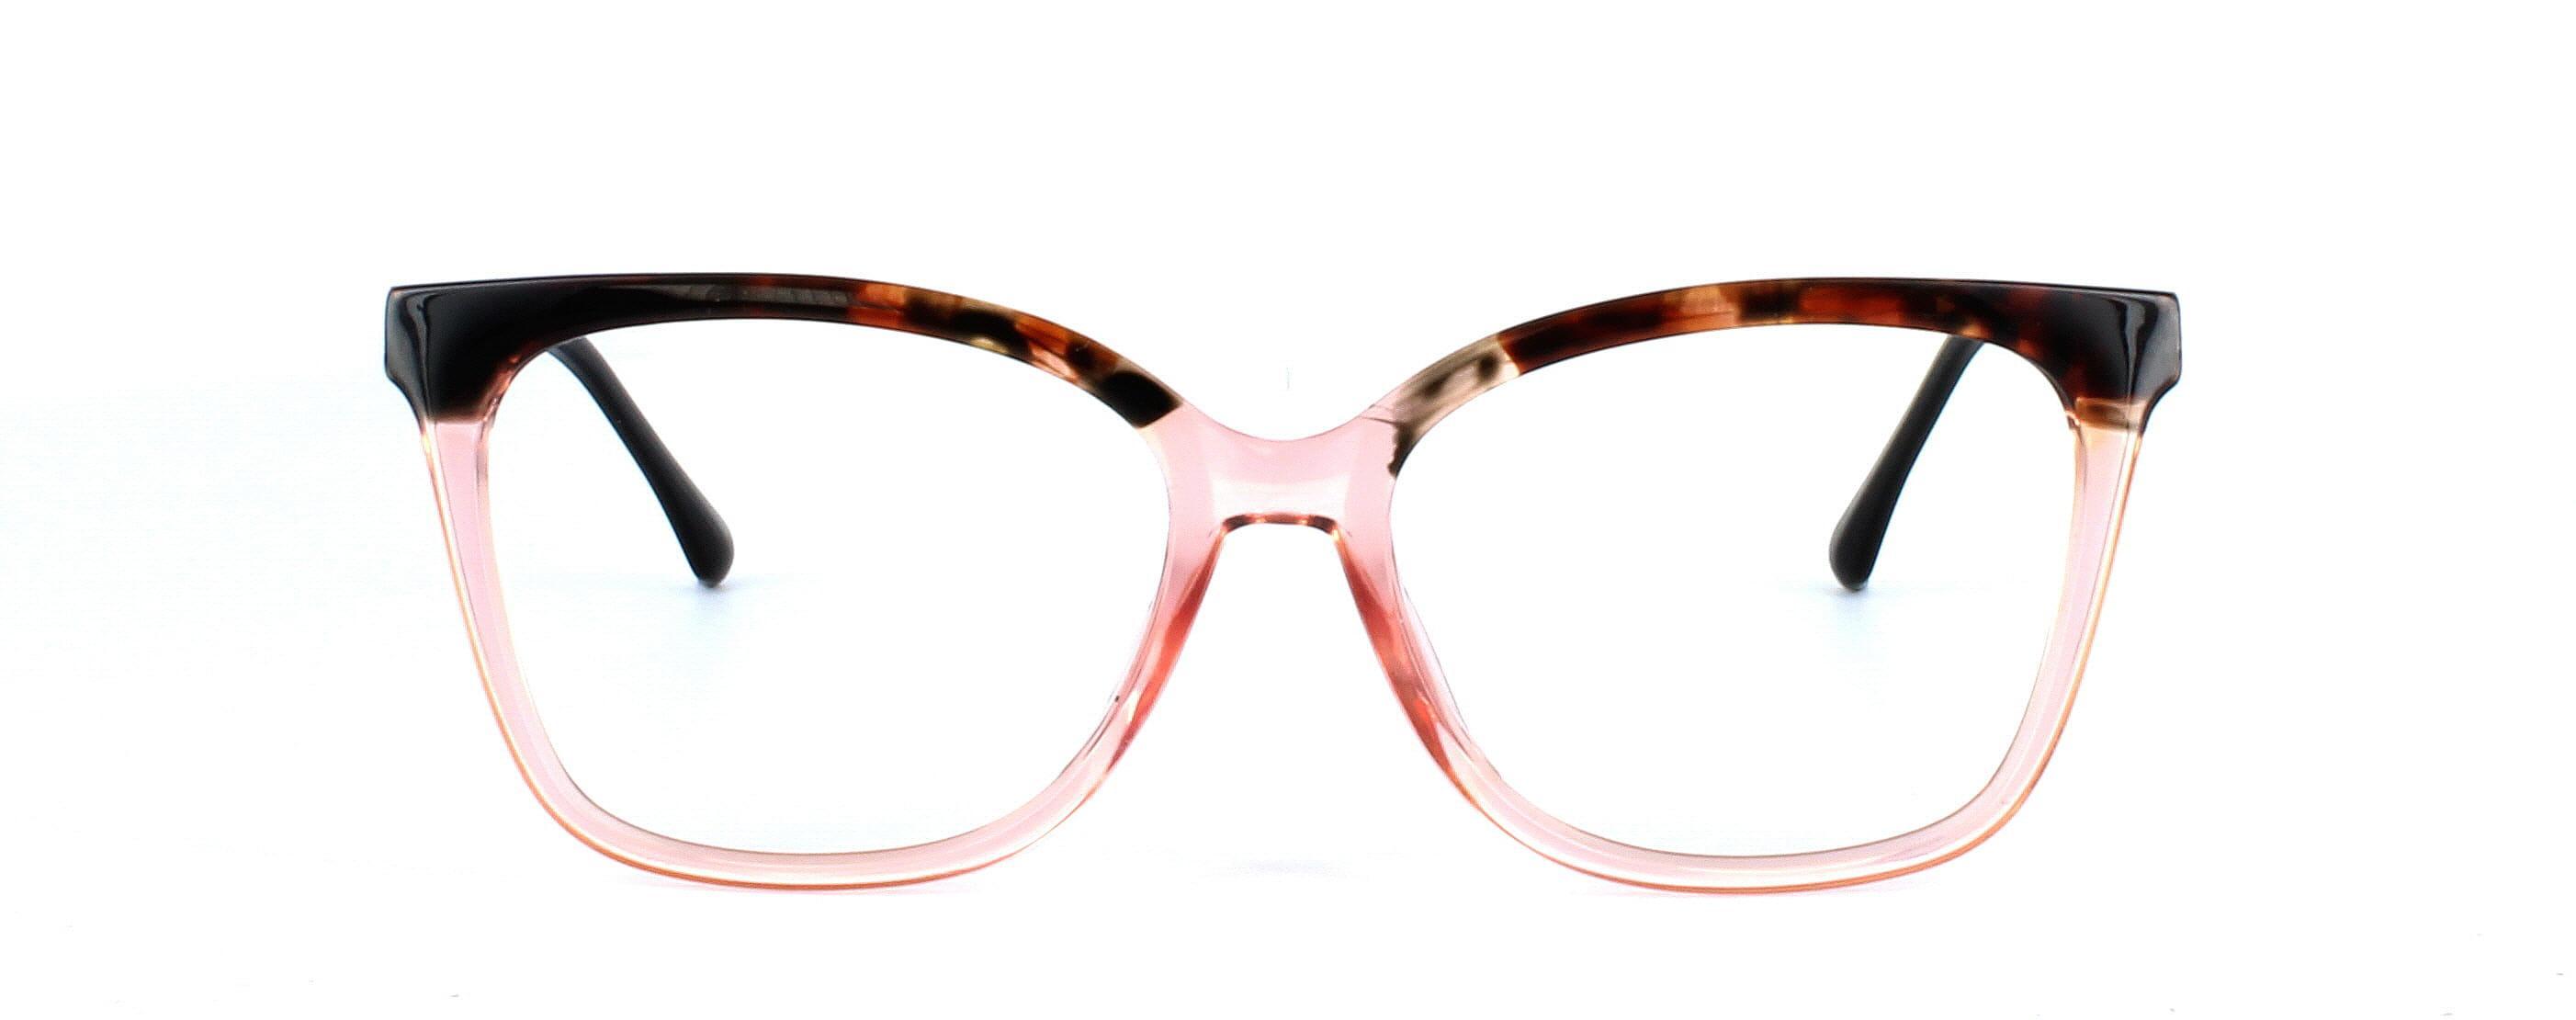 Carina - ladies 2-tone plastic glasses with square shaped lenses - image view 5